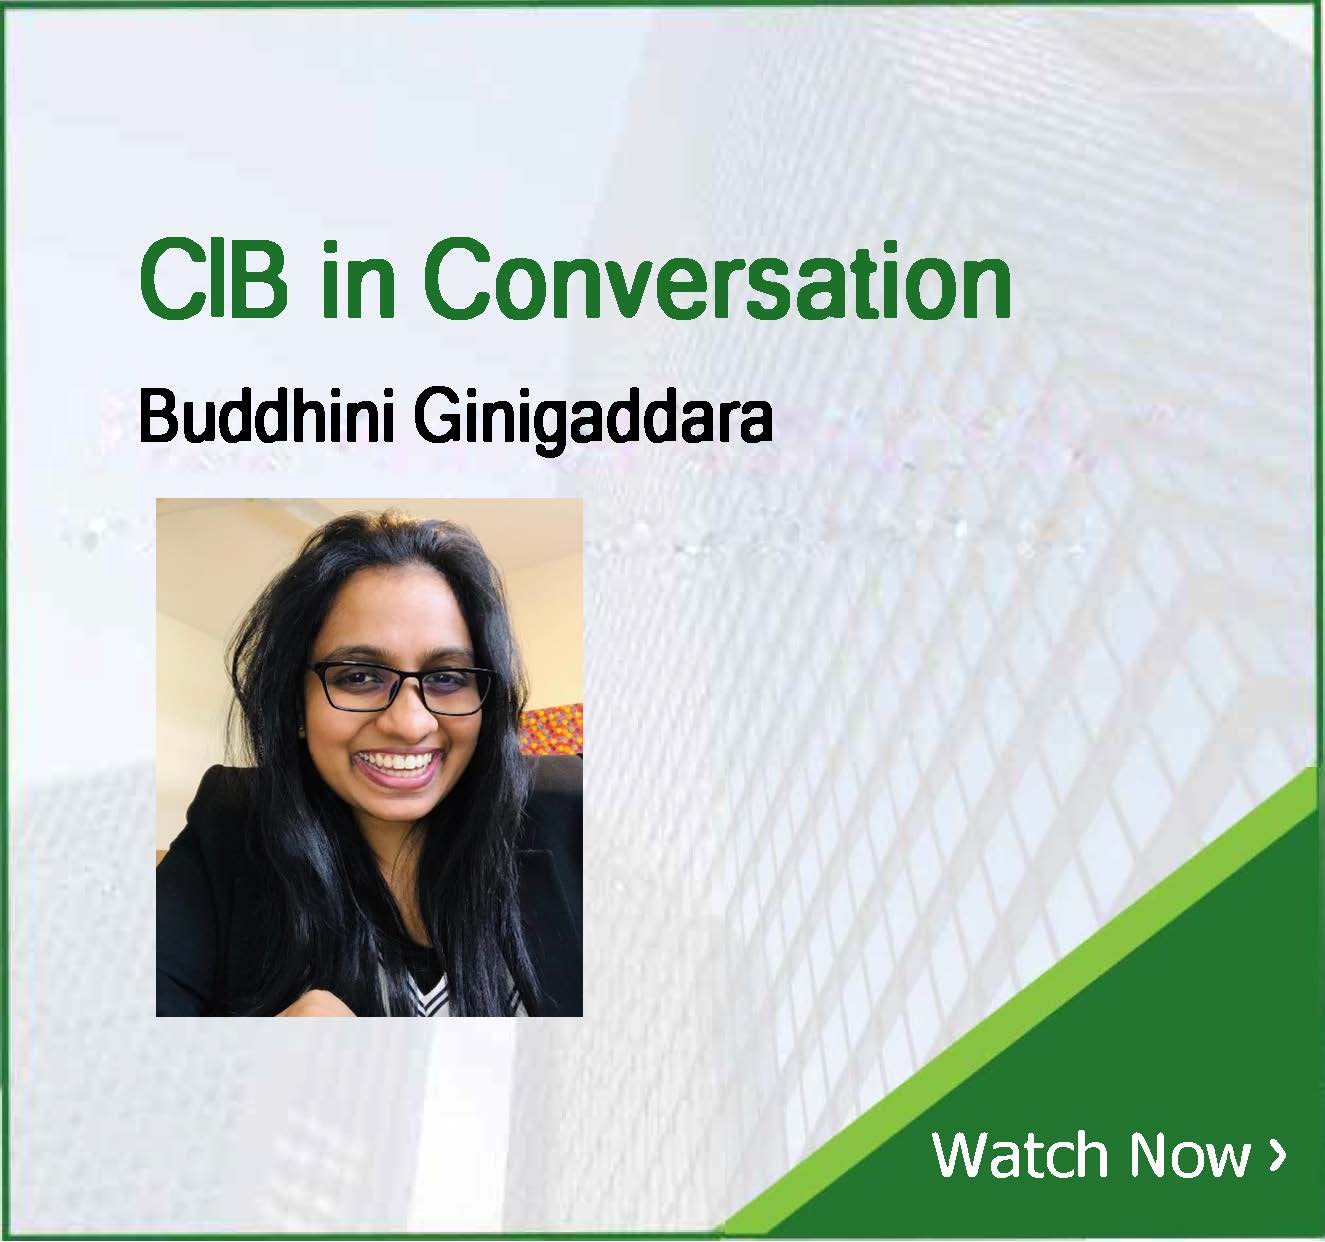 CIB in Conversation with Buddhini Ginigaddara